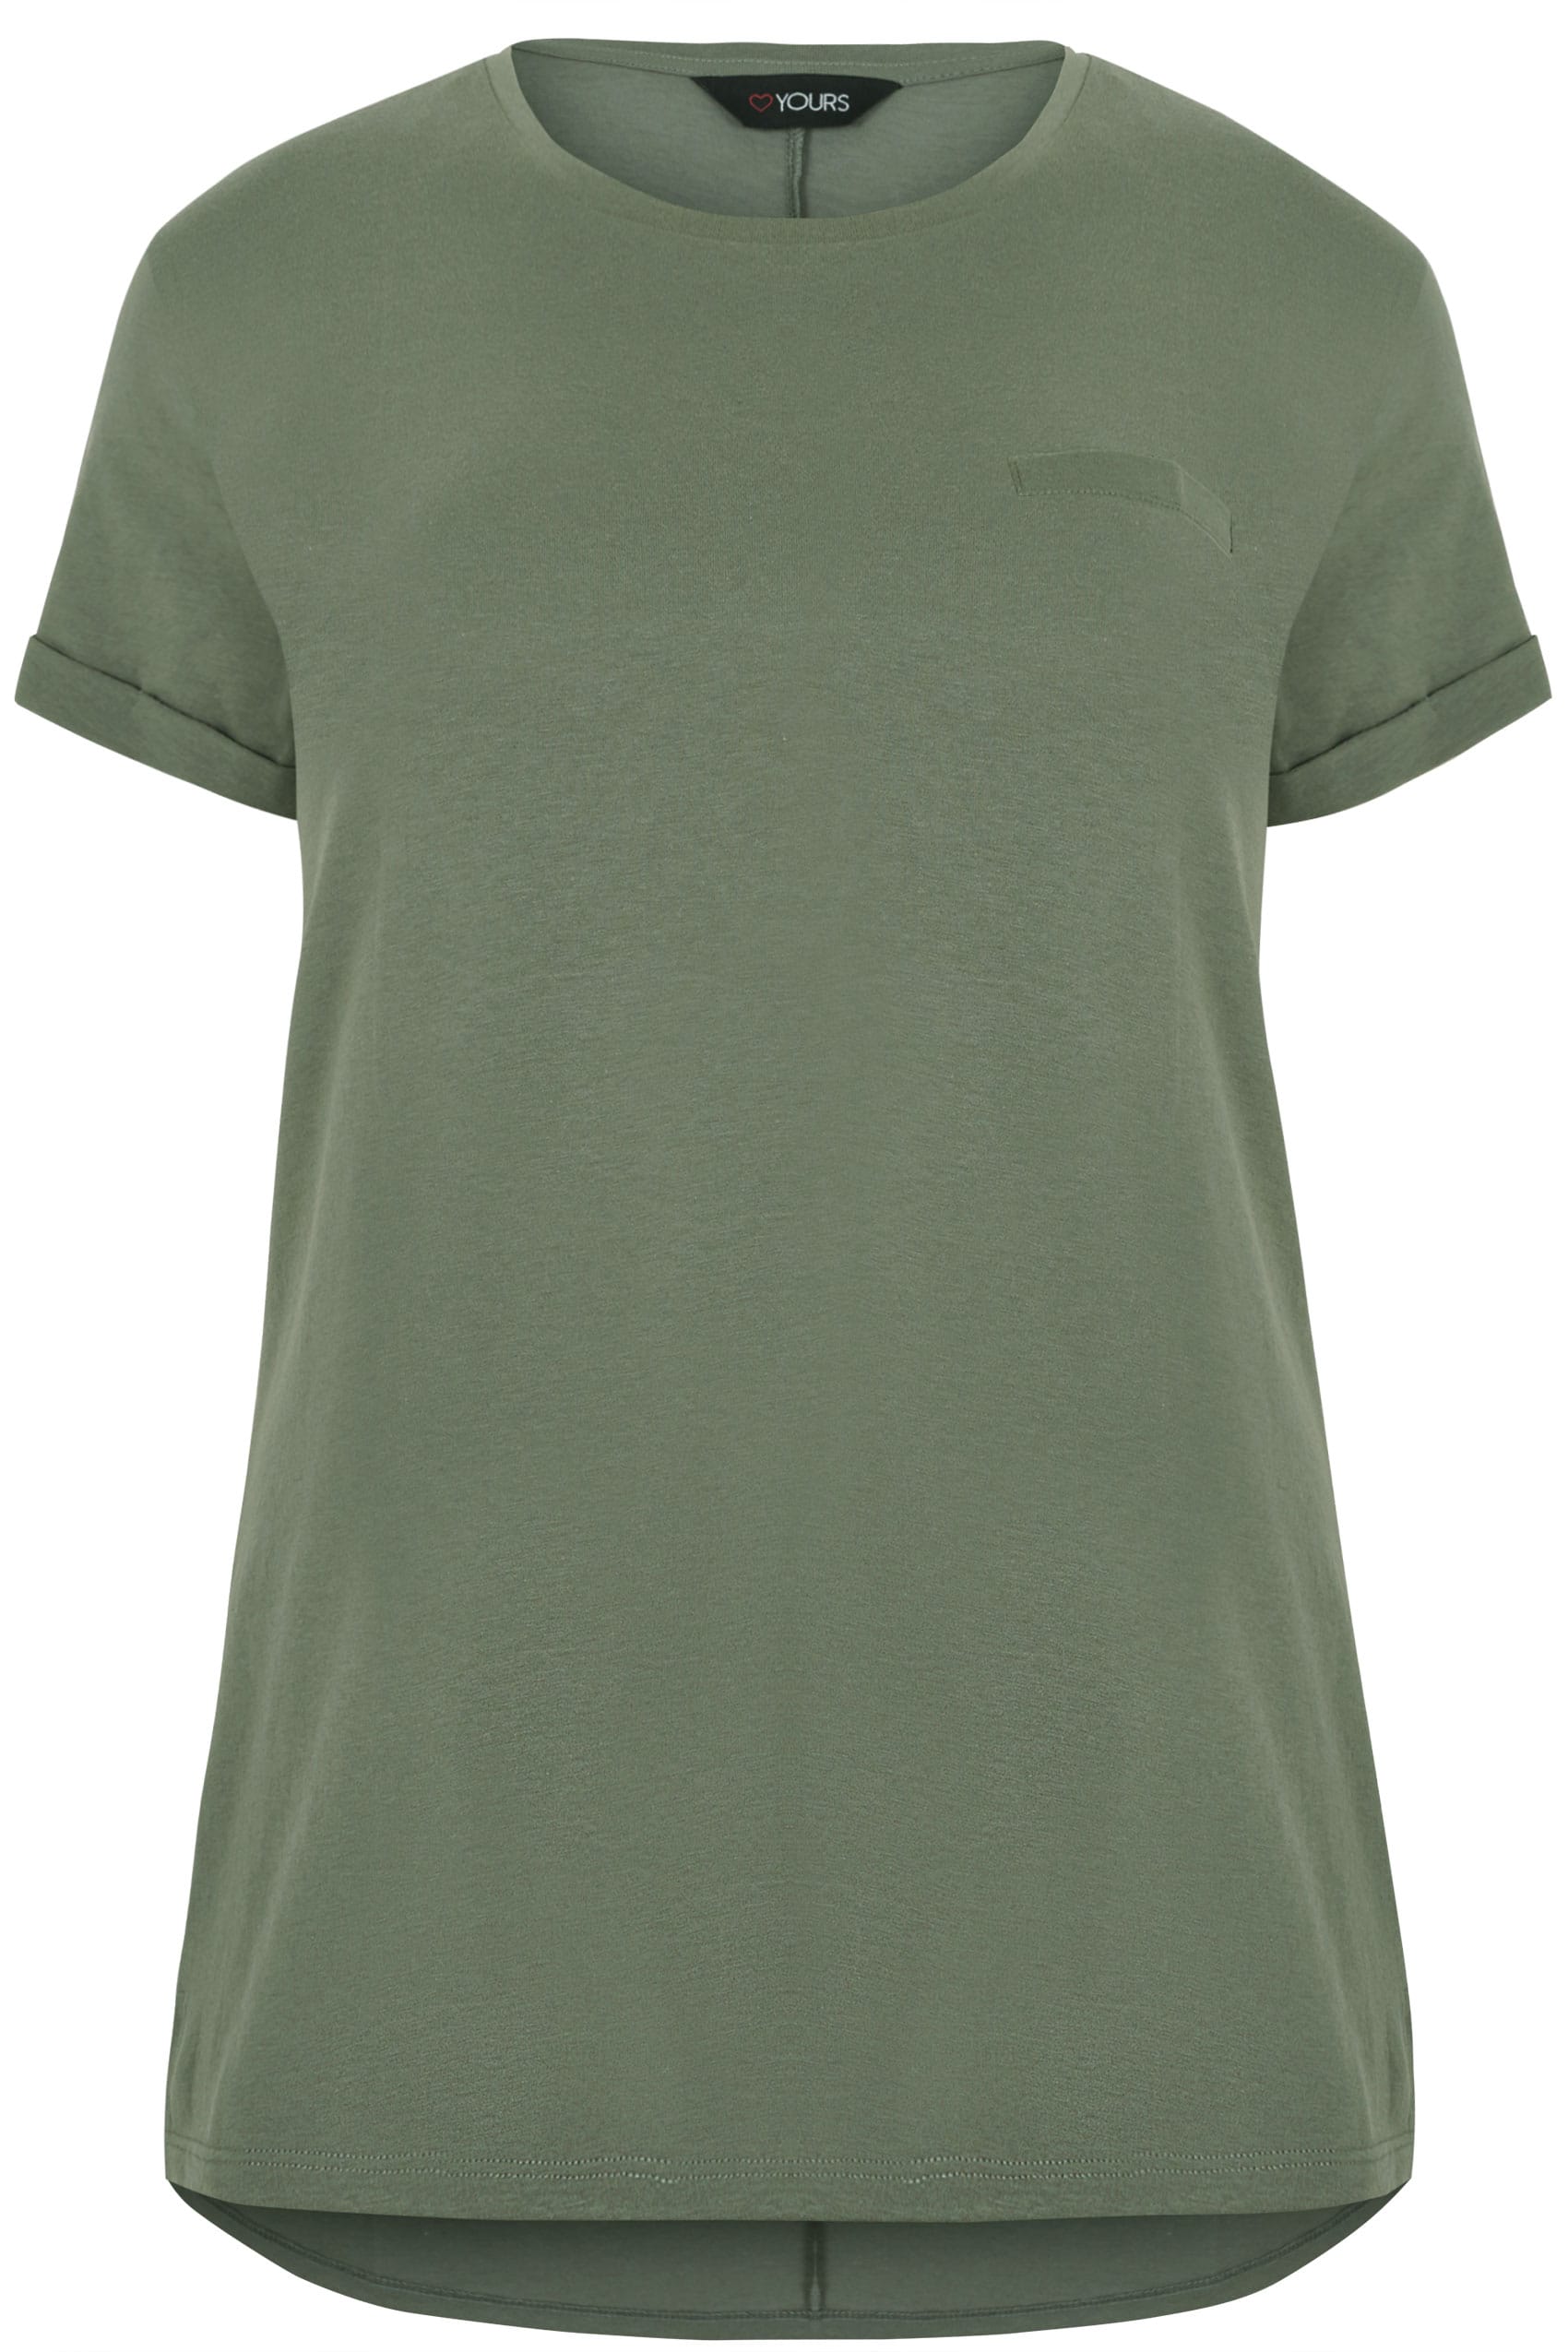 Khaki Green Mock Pocket T-Shirt With Curved Hem, Plus size 16 to 36